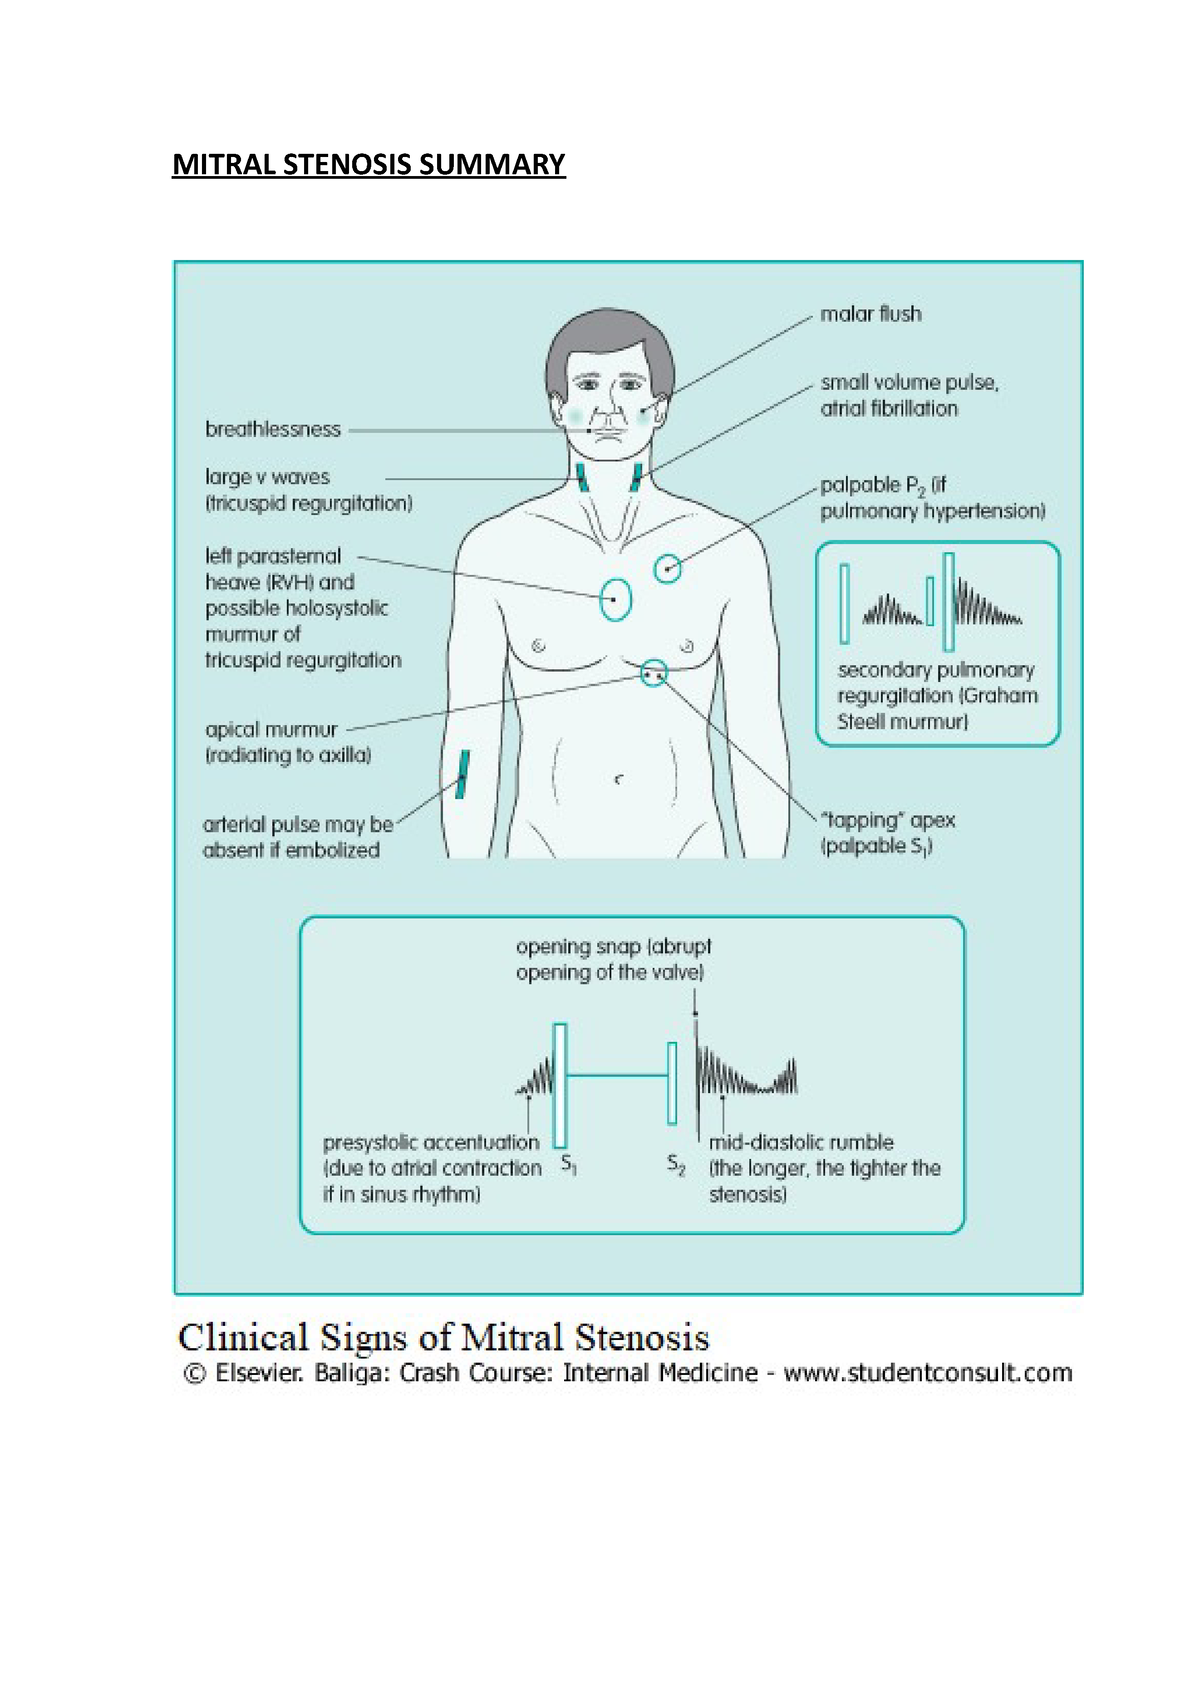 malar flush mitral stenosis